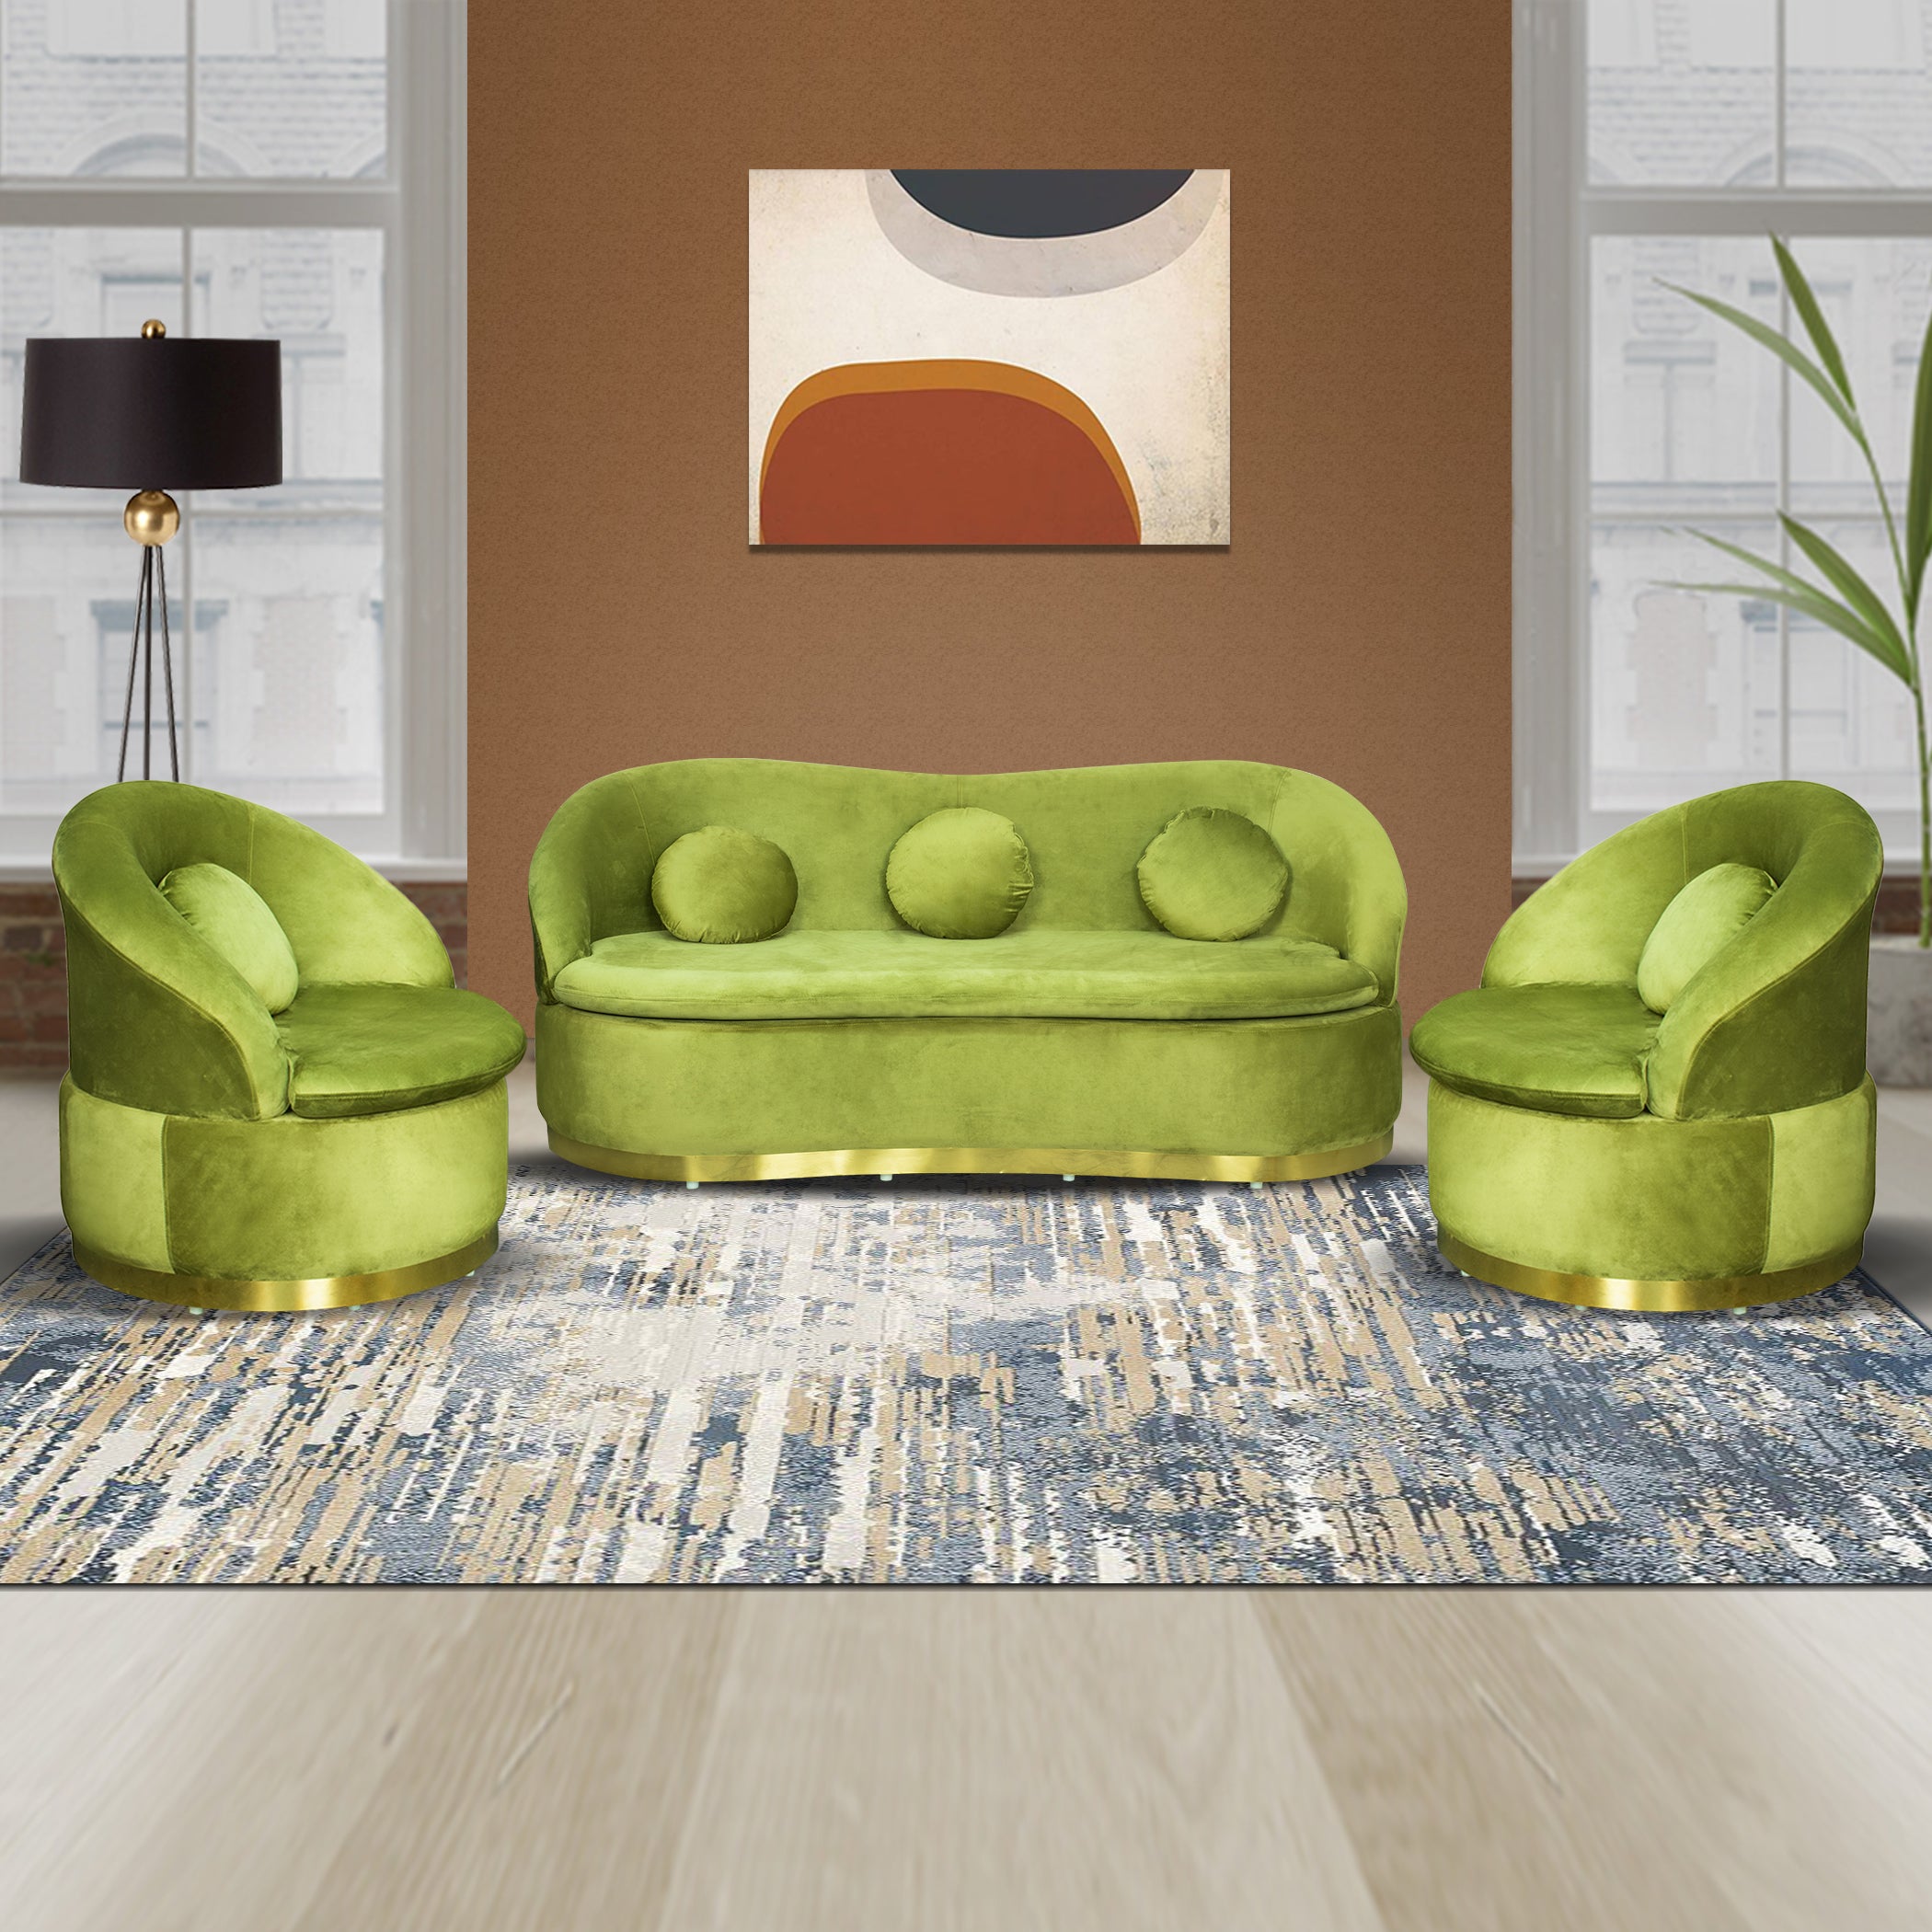 Pluto RoyalGreen 1S Sofa by Zorin Zorin